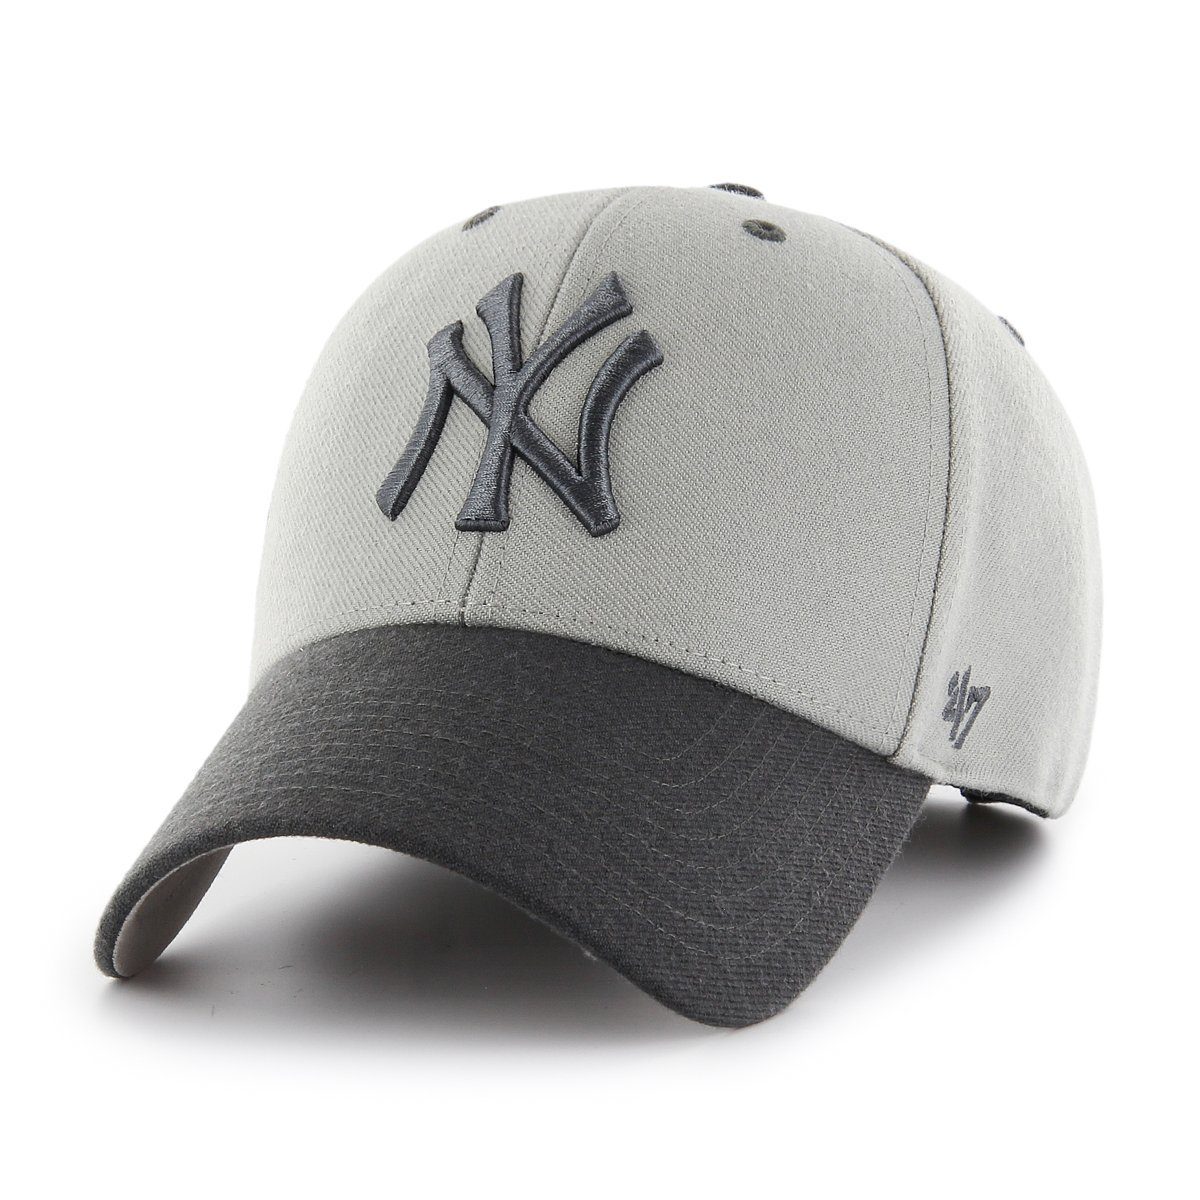 x27;47 Brand Trucker Cap MLB Fit Relaxed Yankees York New